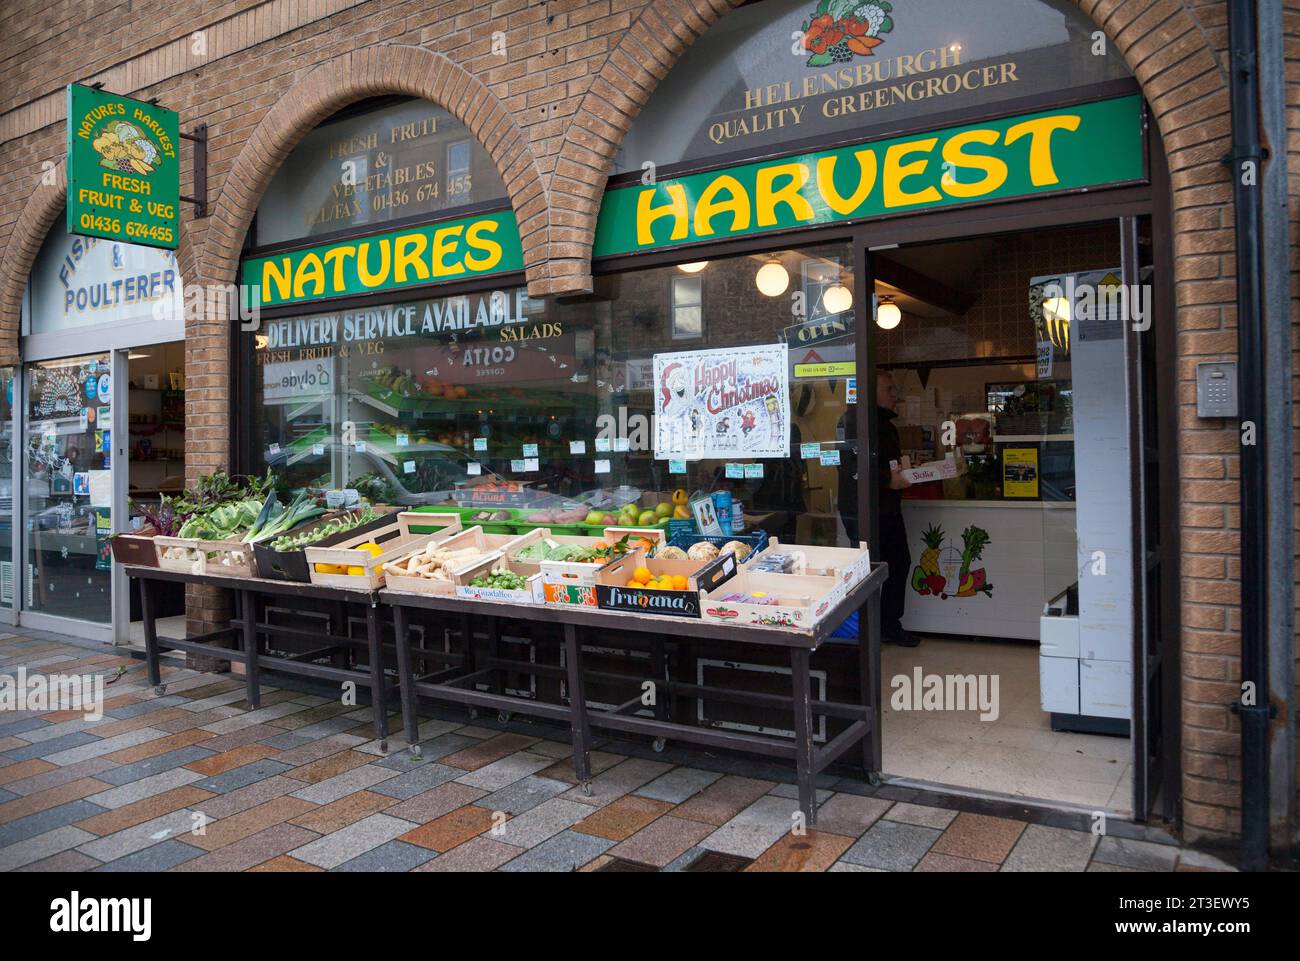 Natures Harvest - greengrocer in West Princes St, Helensburgh Foto Stock